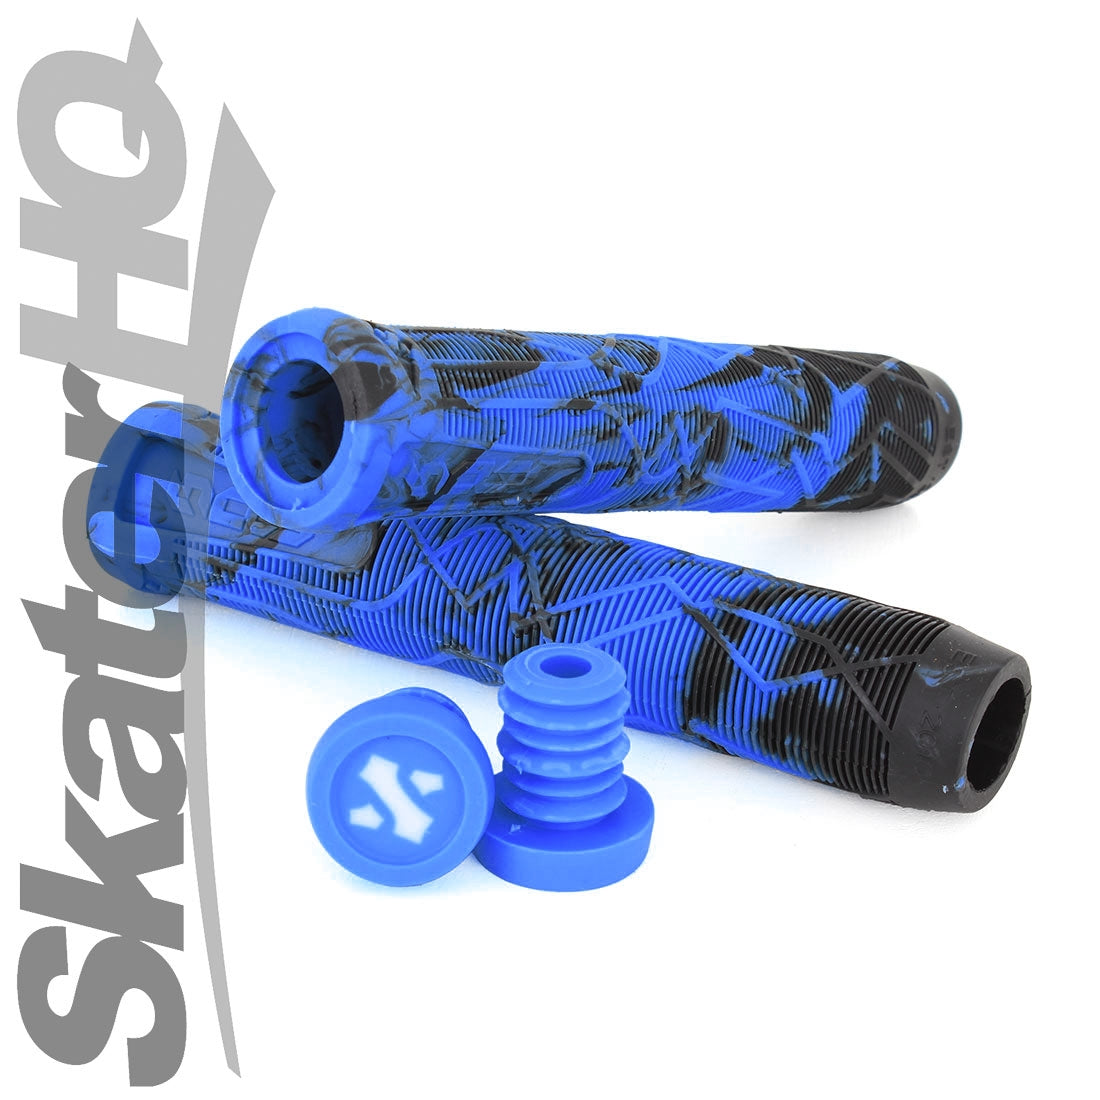 Sacrifice Spy Grips - Blue/Black Swirl Scooter Grips